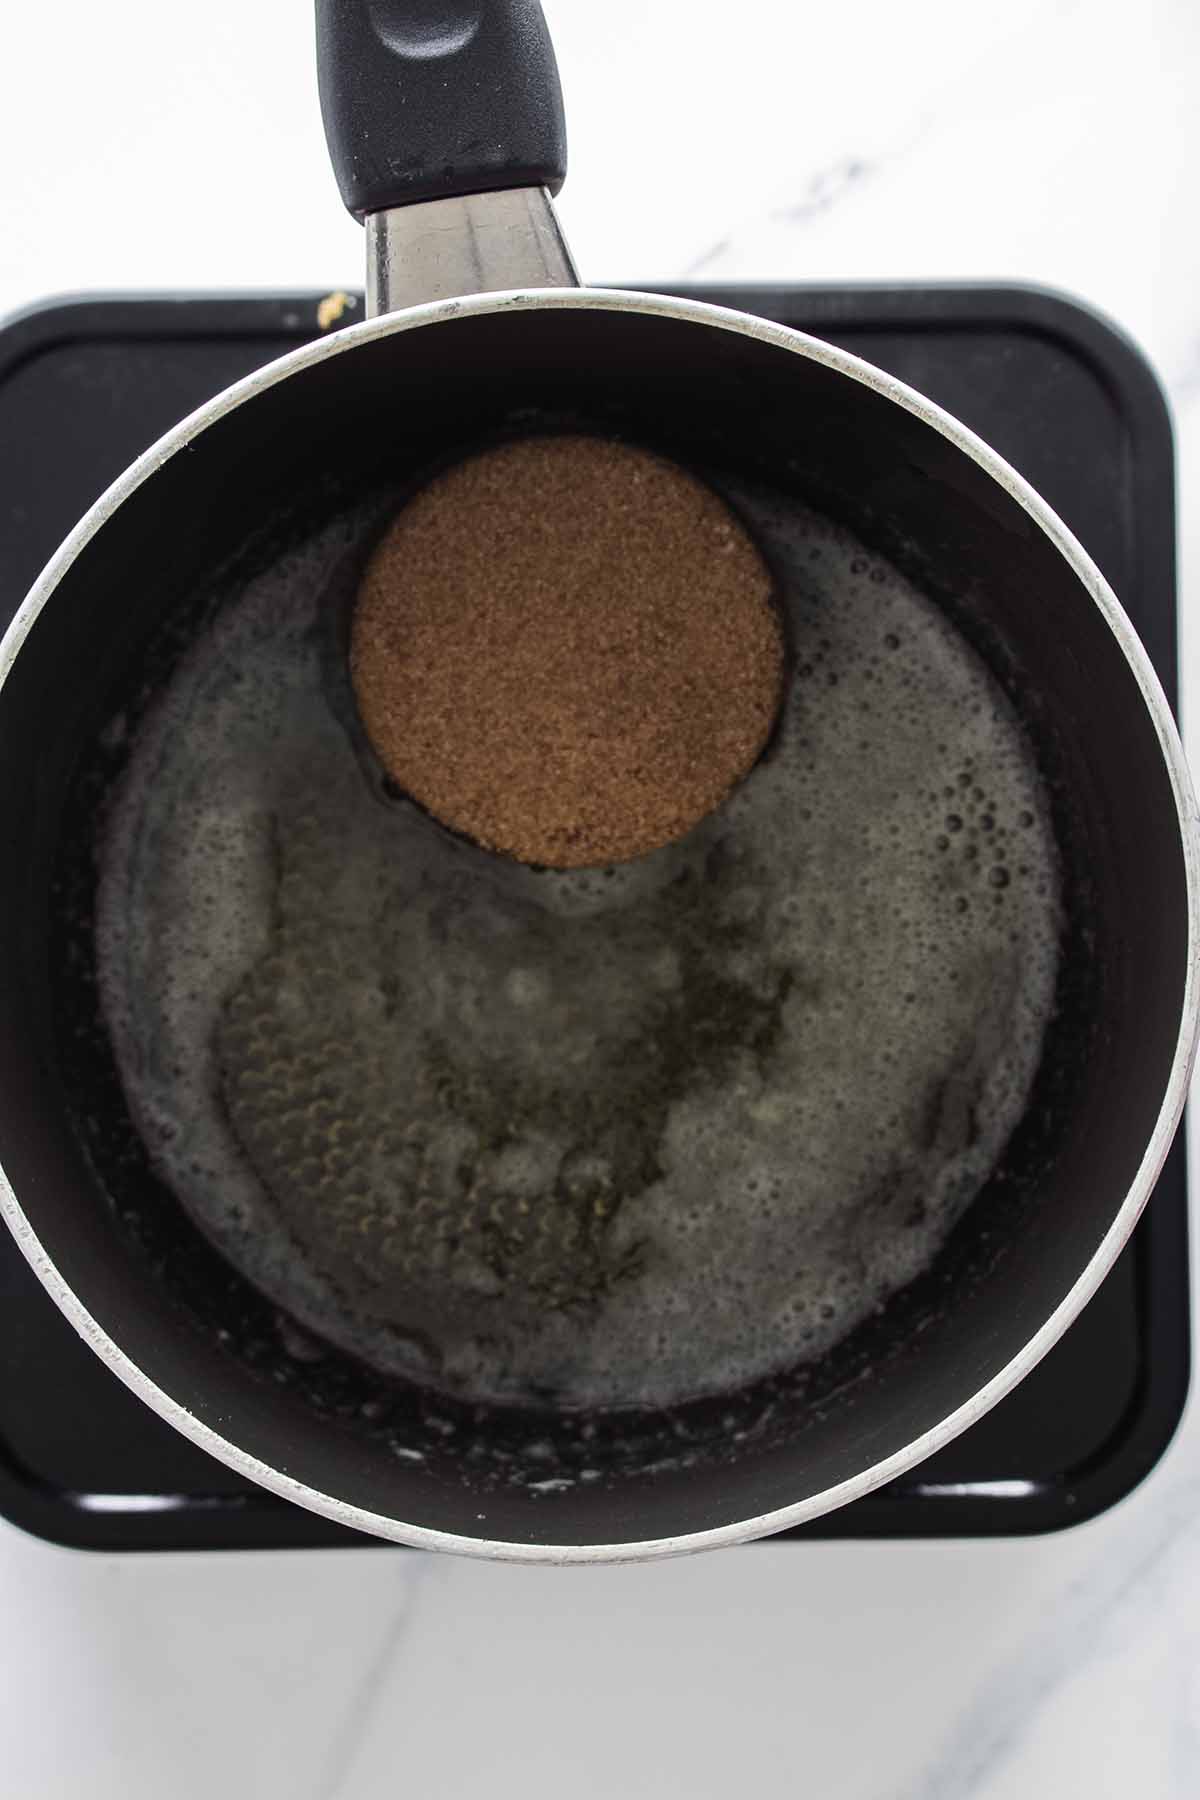 Brown sugar melting in a saucepan